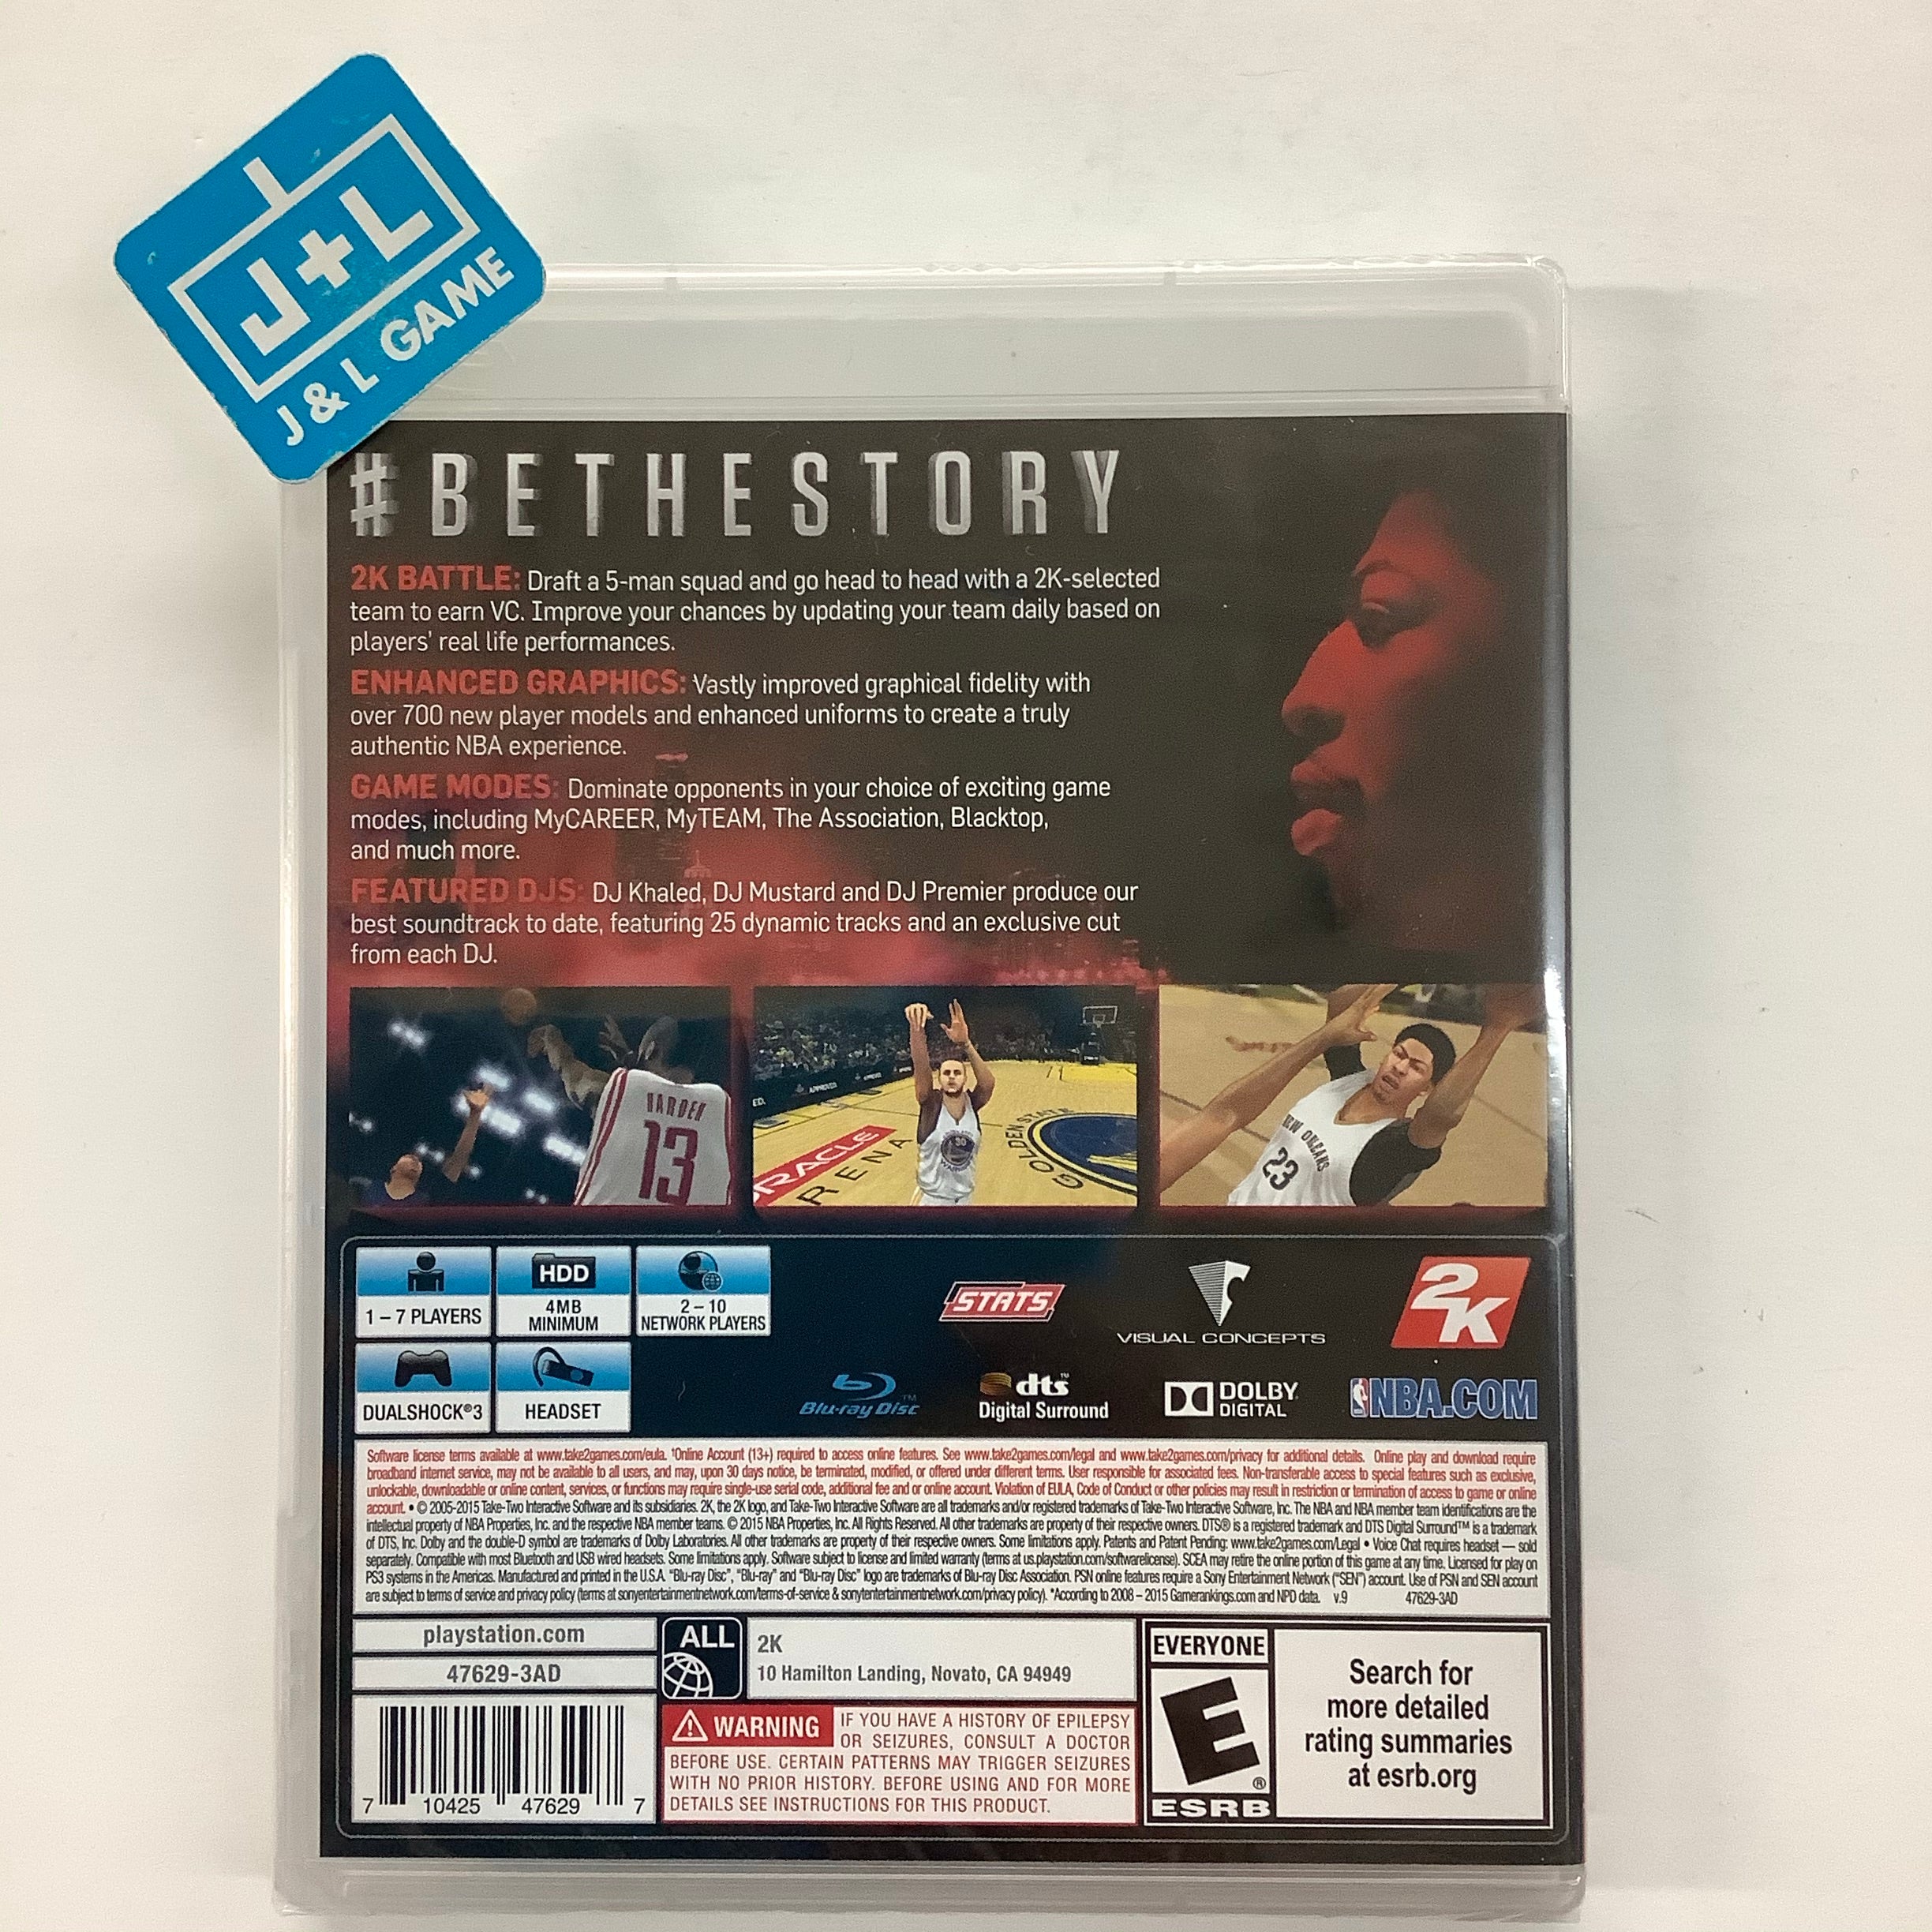 NBA 2K16 - (PS3) PlayStation 3 Video Games 2K Sports   